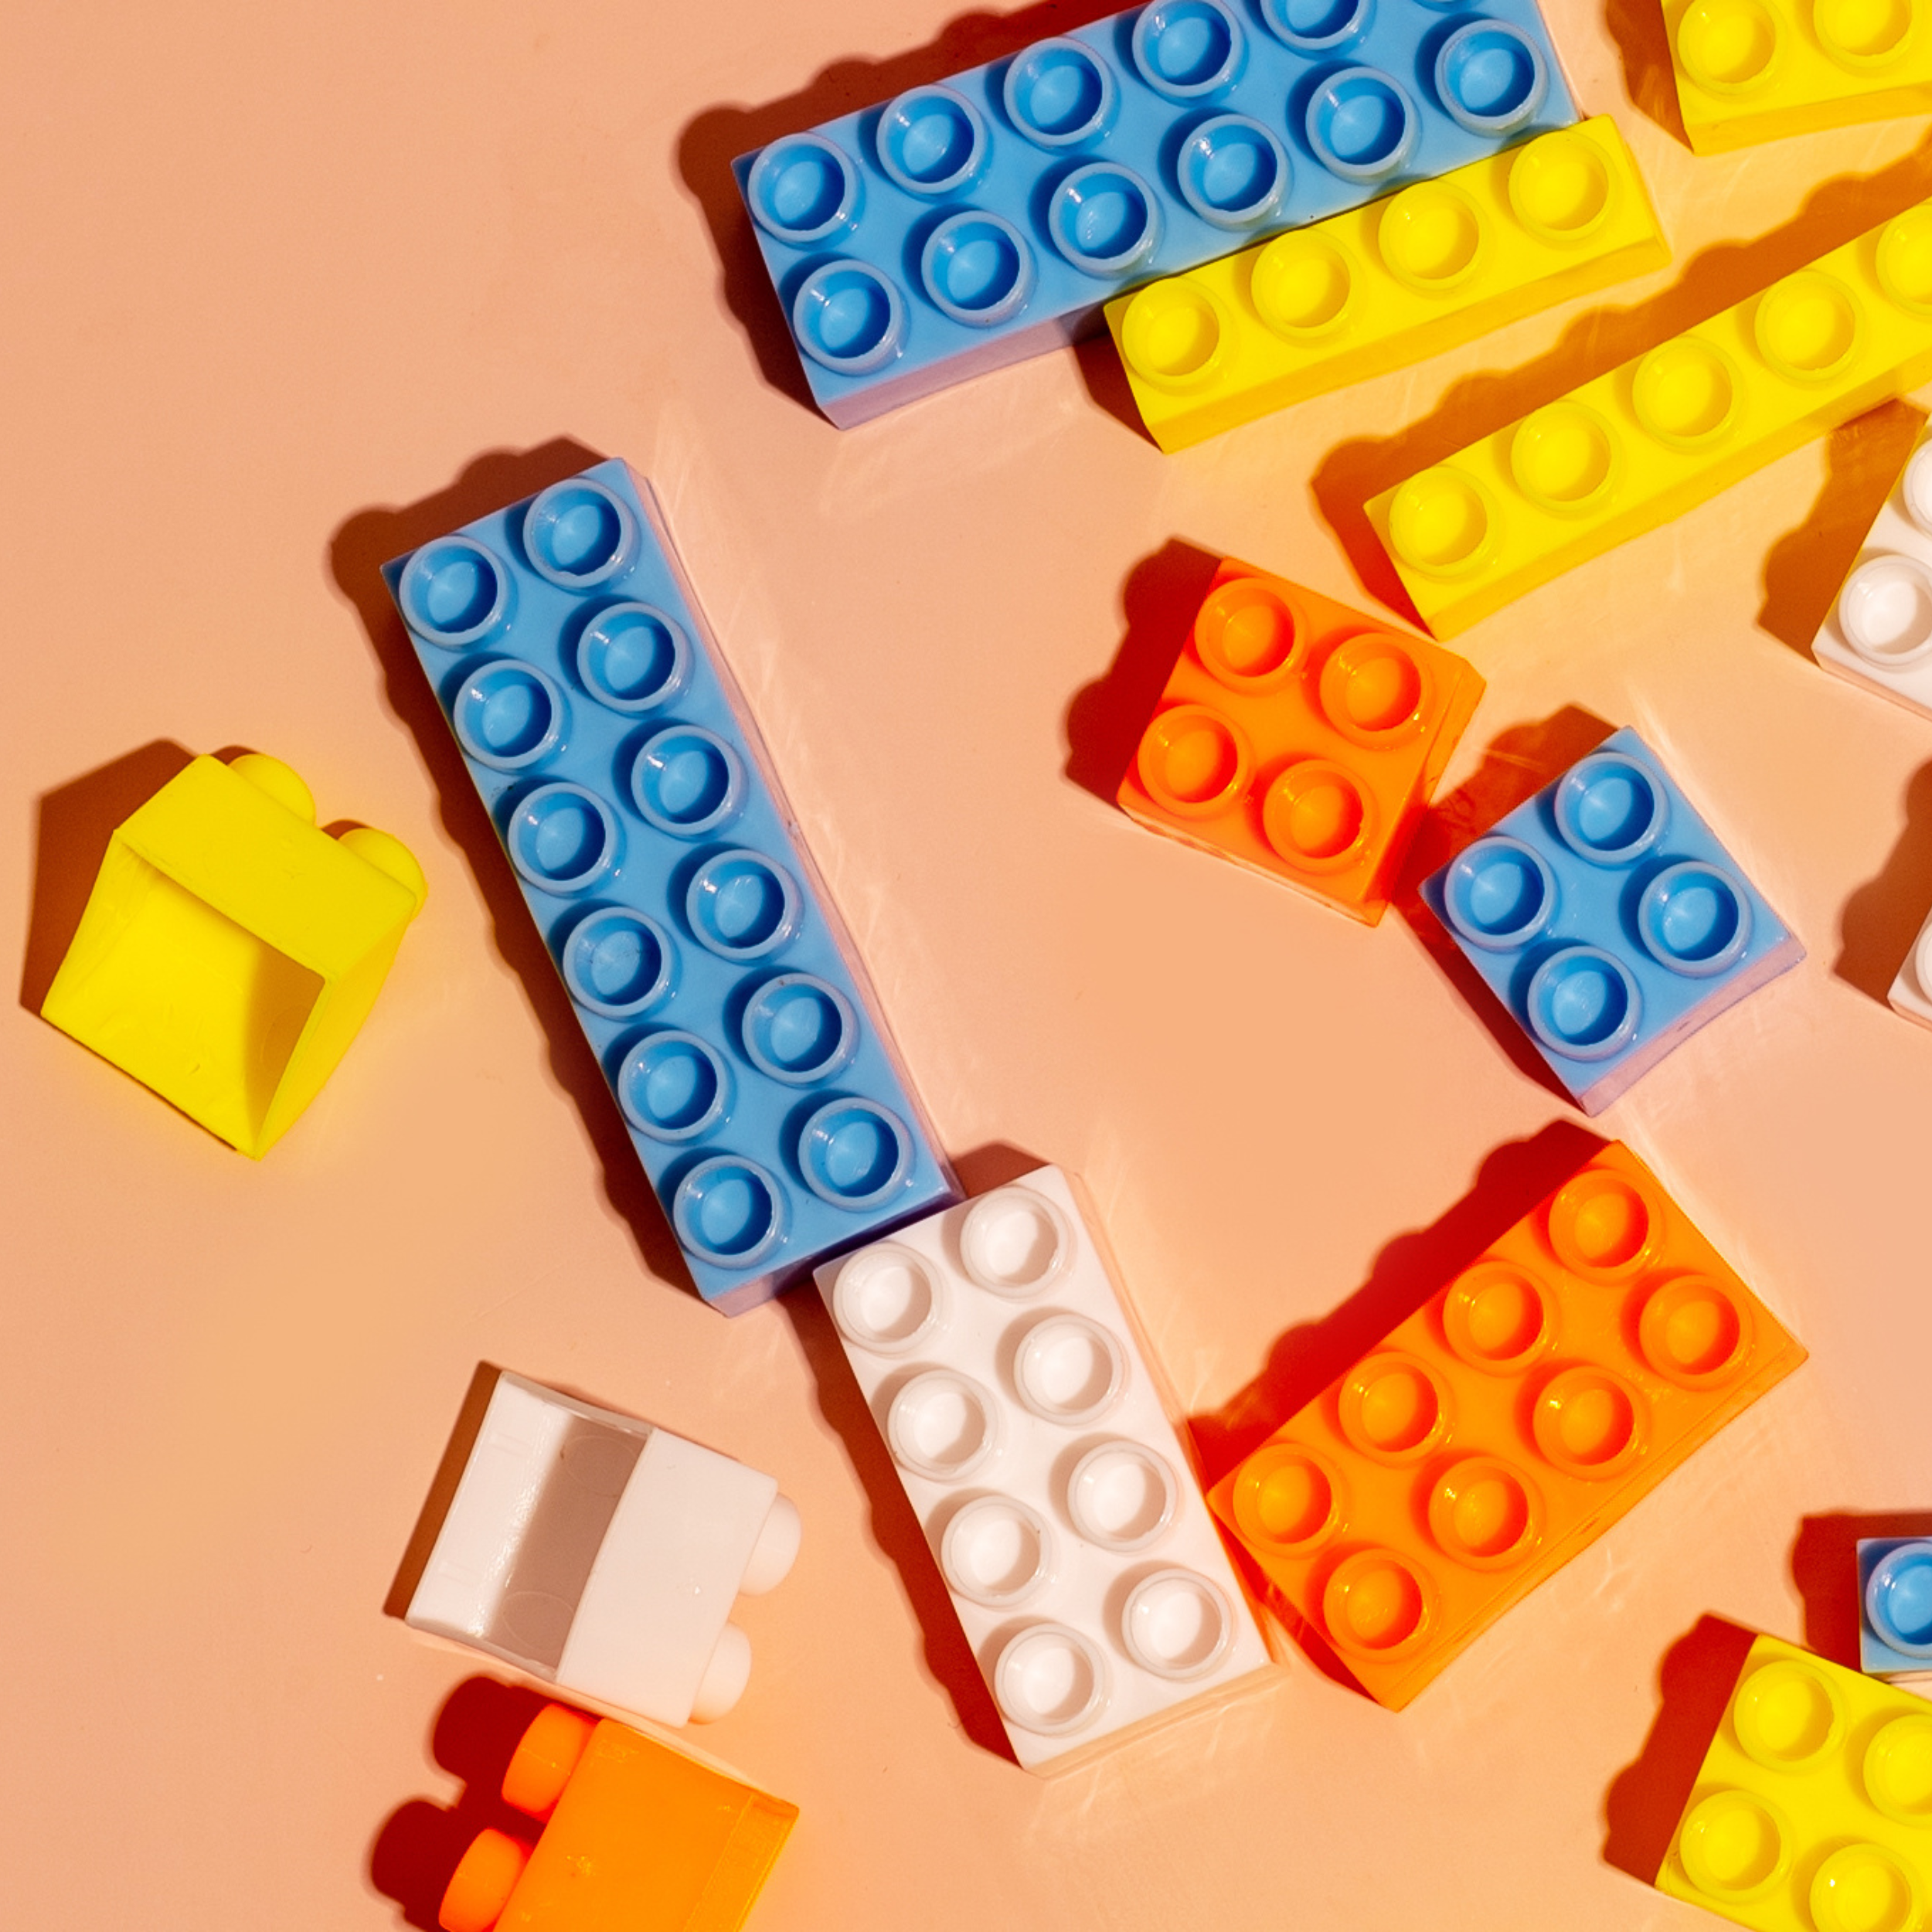 Lego bricks of various colors